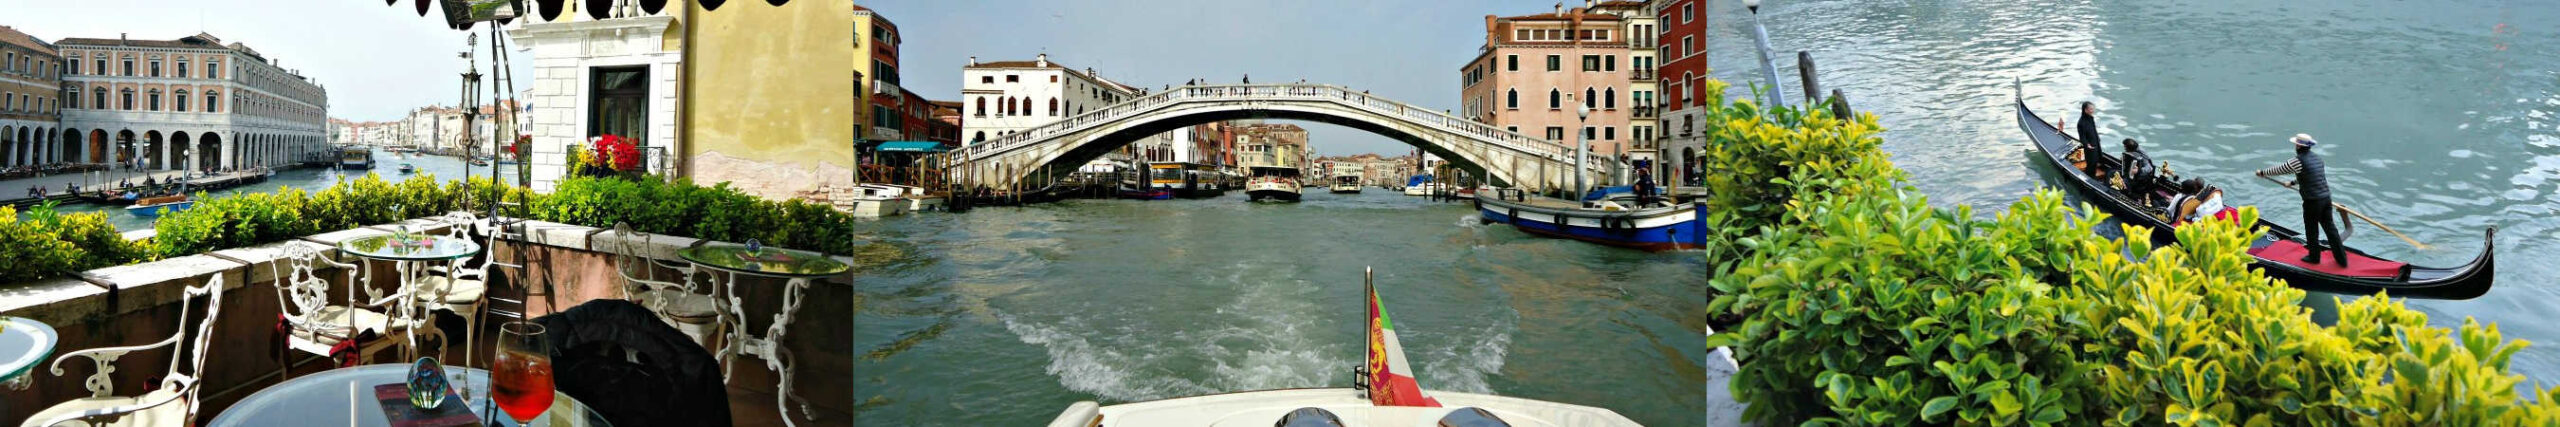 Venice Photos